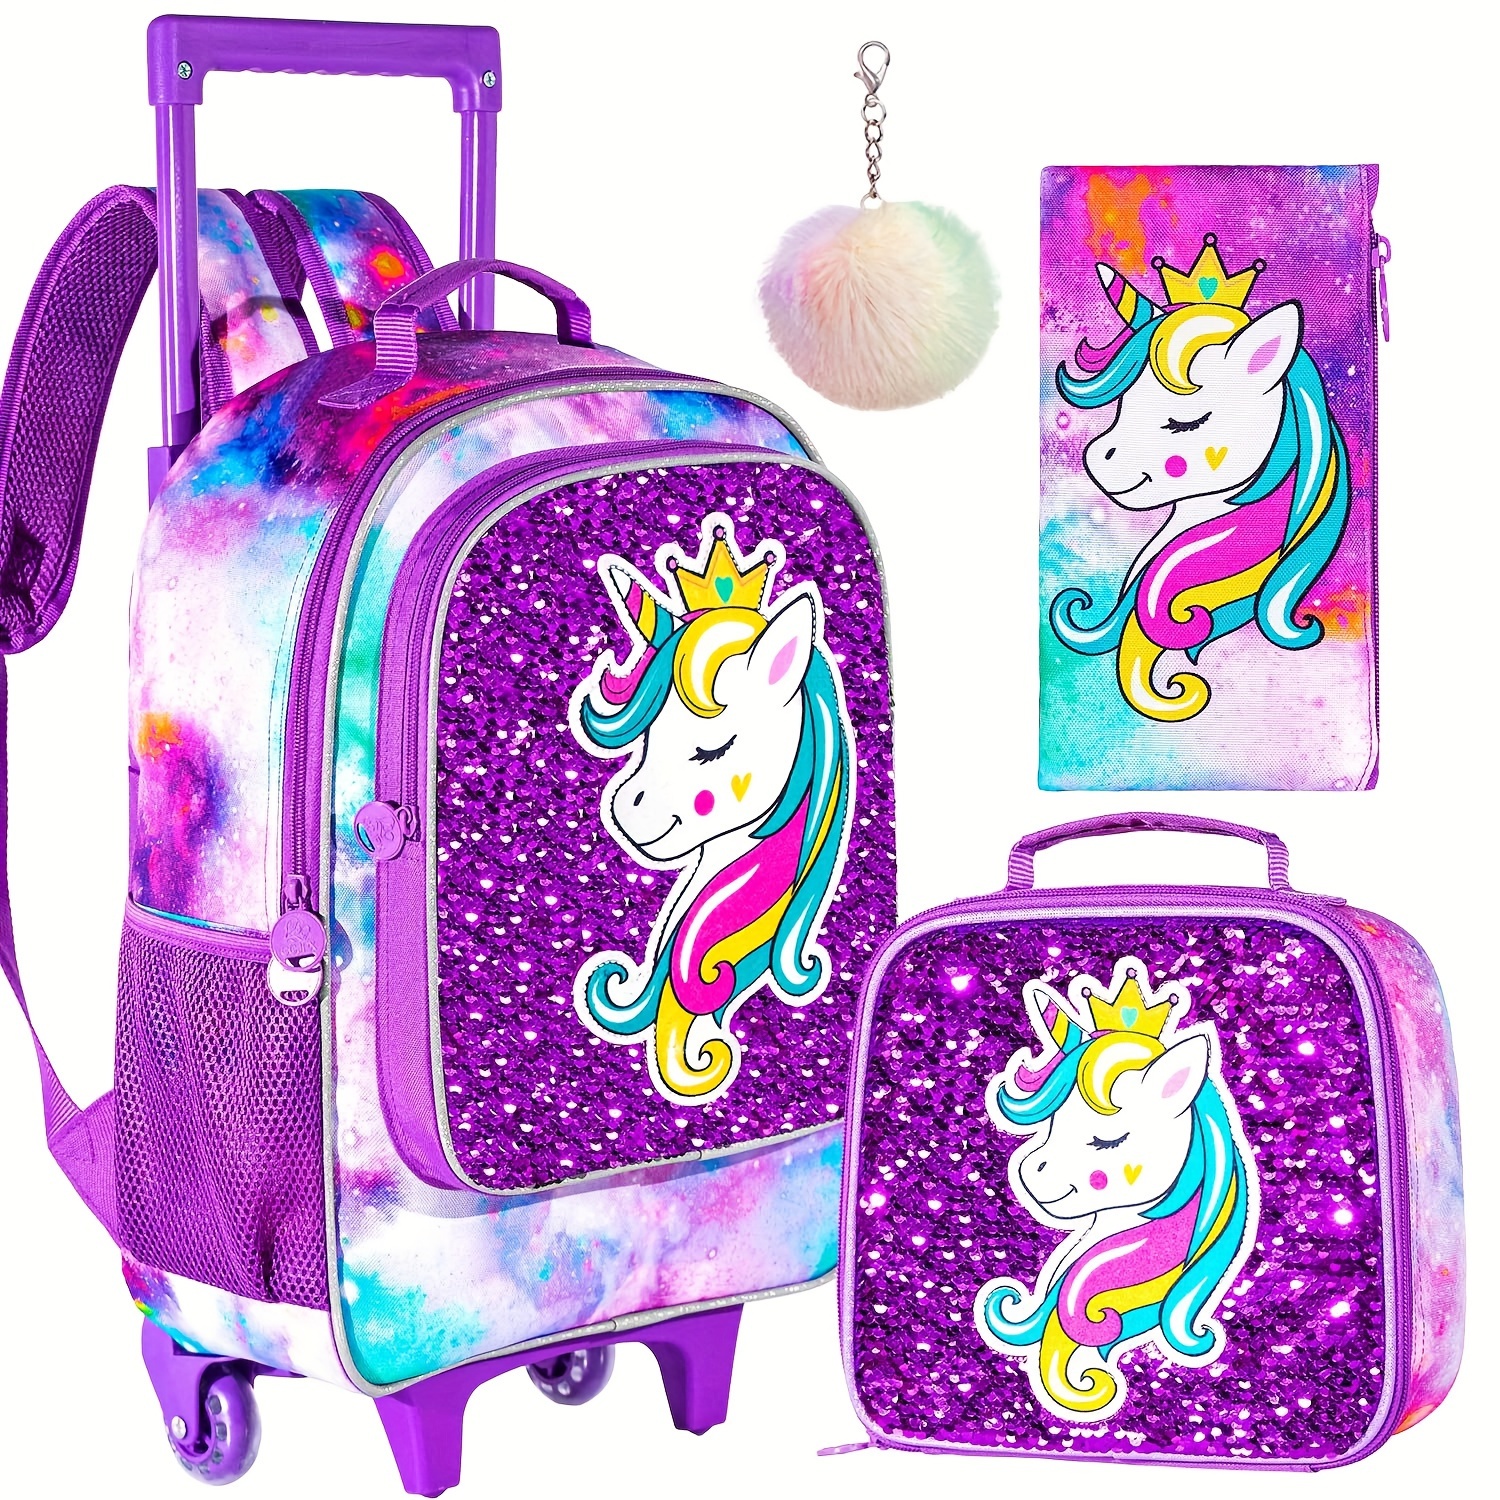 Mochila con diseño de unicornio para niña